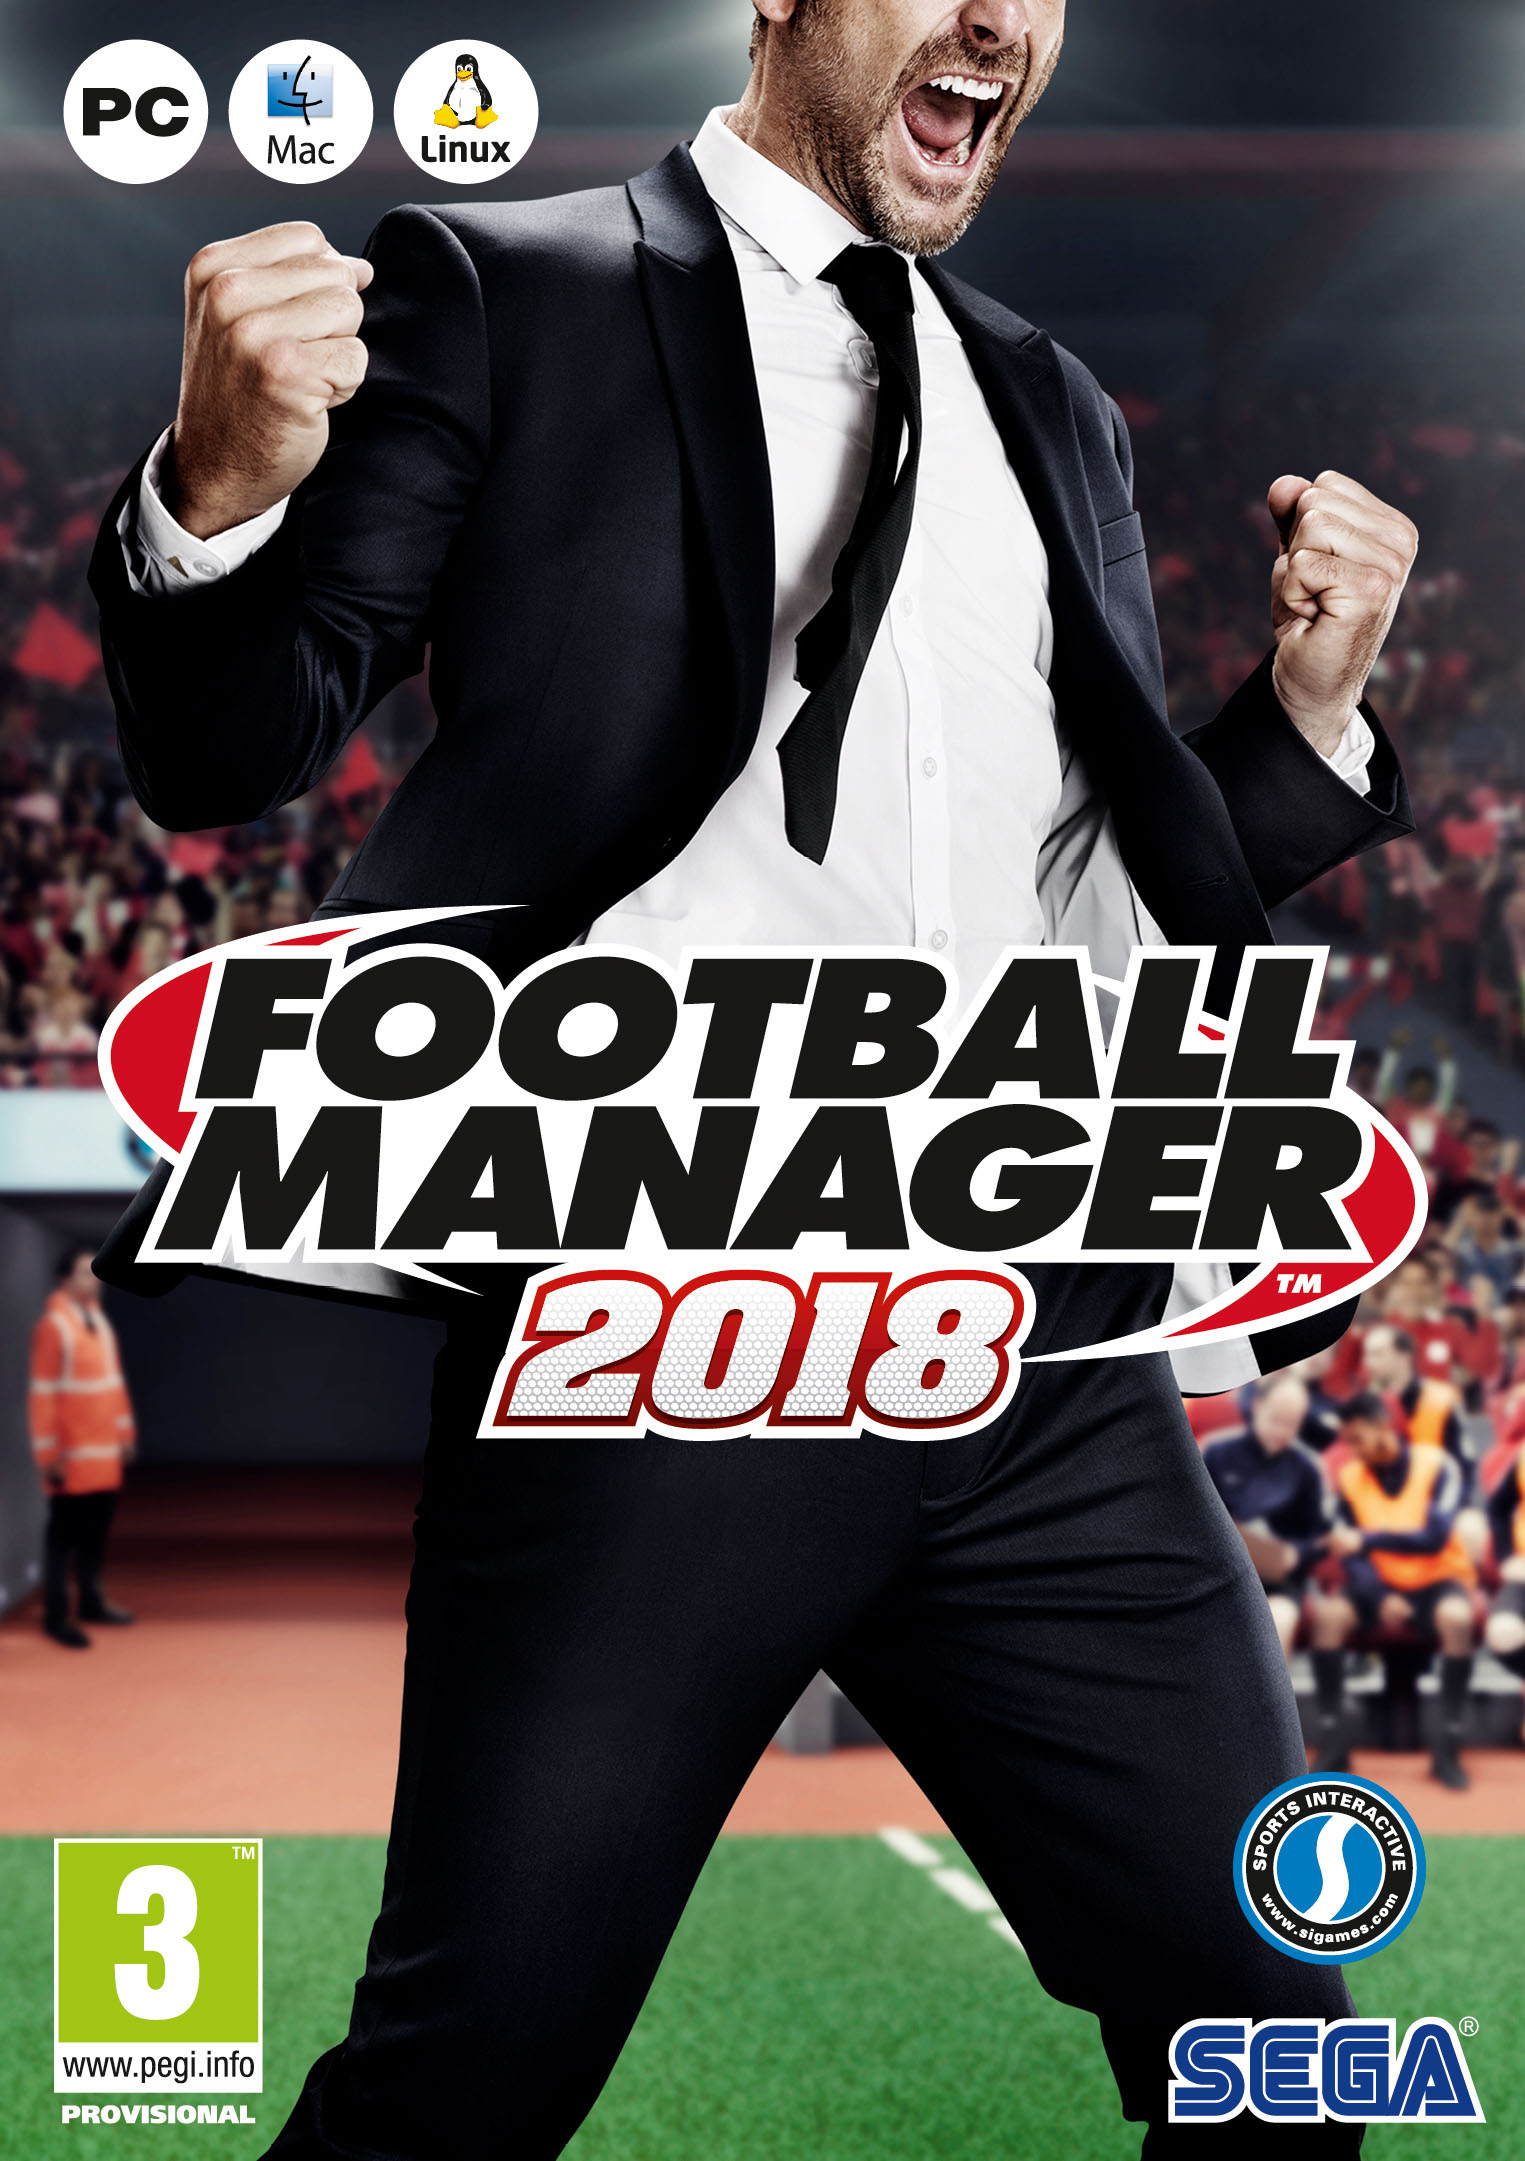 Football Manager 2018 Box Art